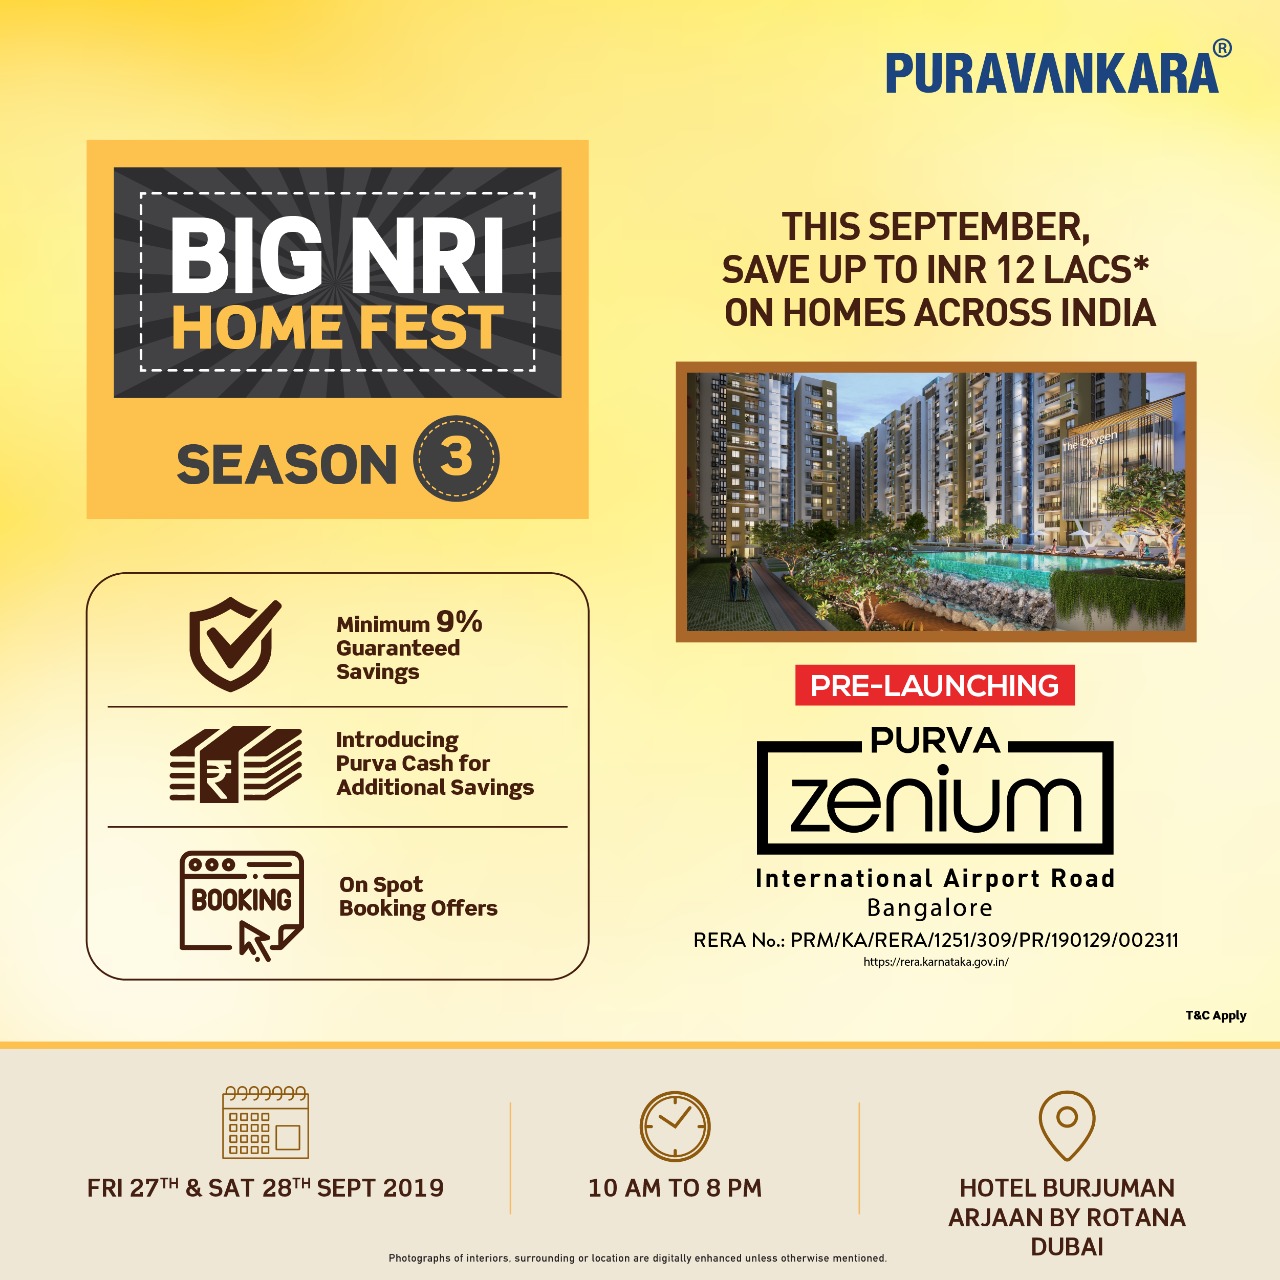 Purva Zenium offers minimum 9% guaranteed savings at big NRI home fest in Bangalore Update